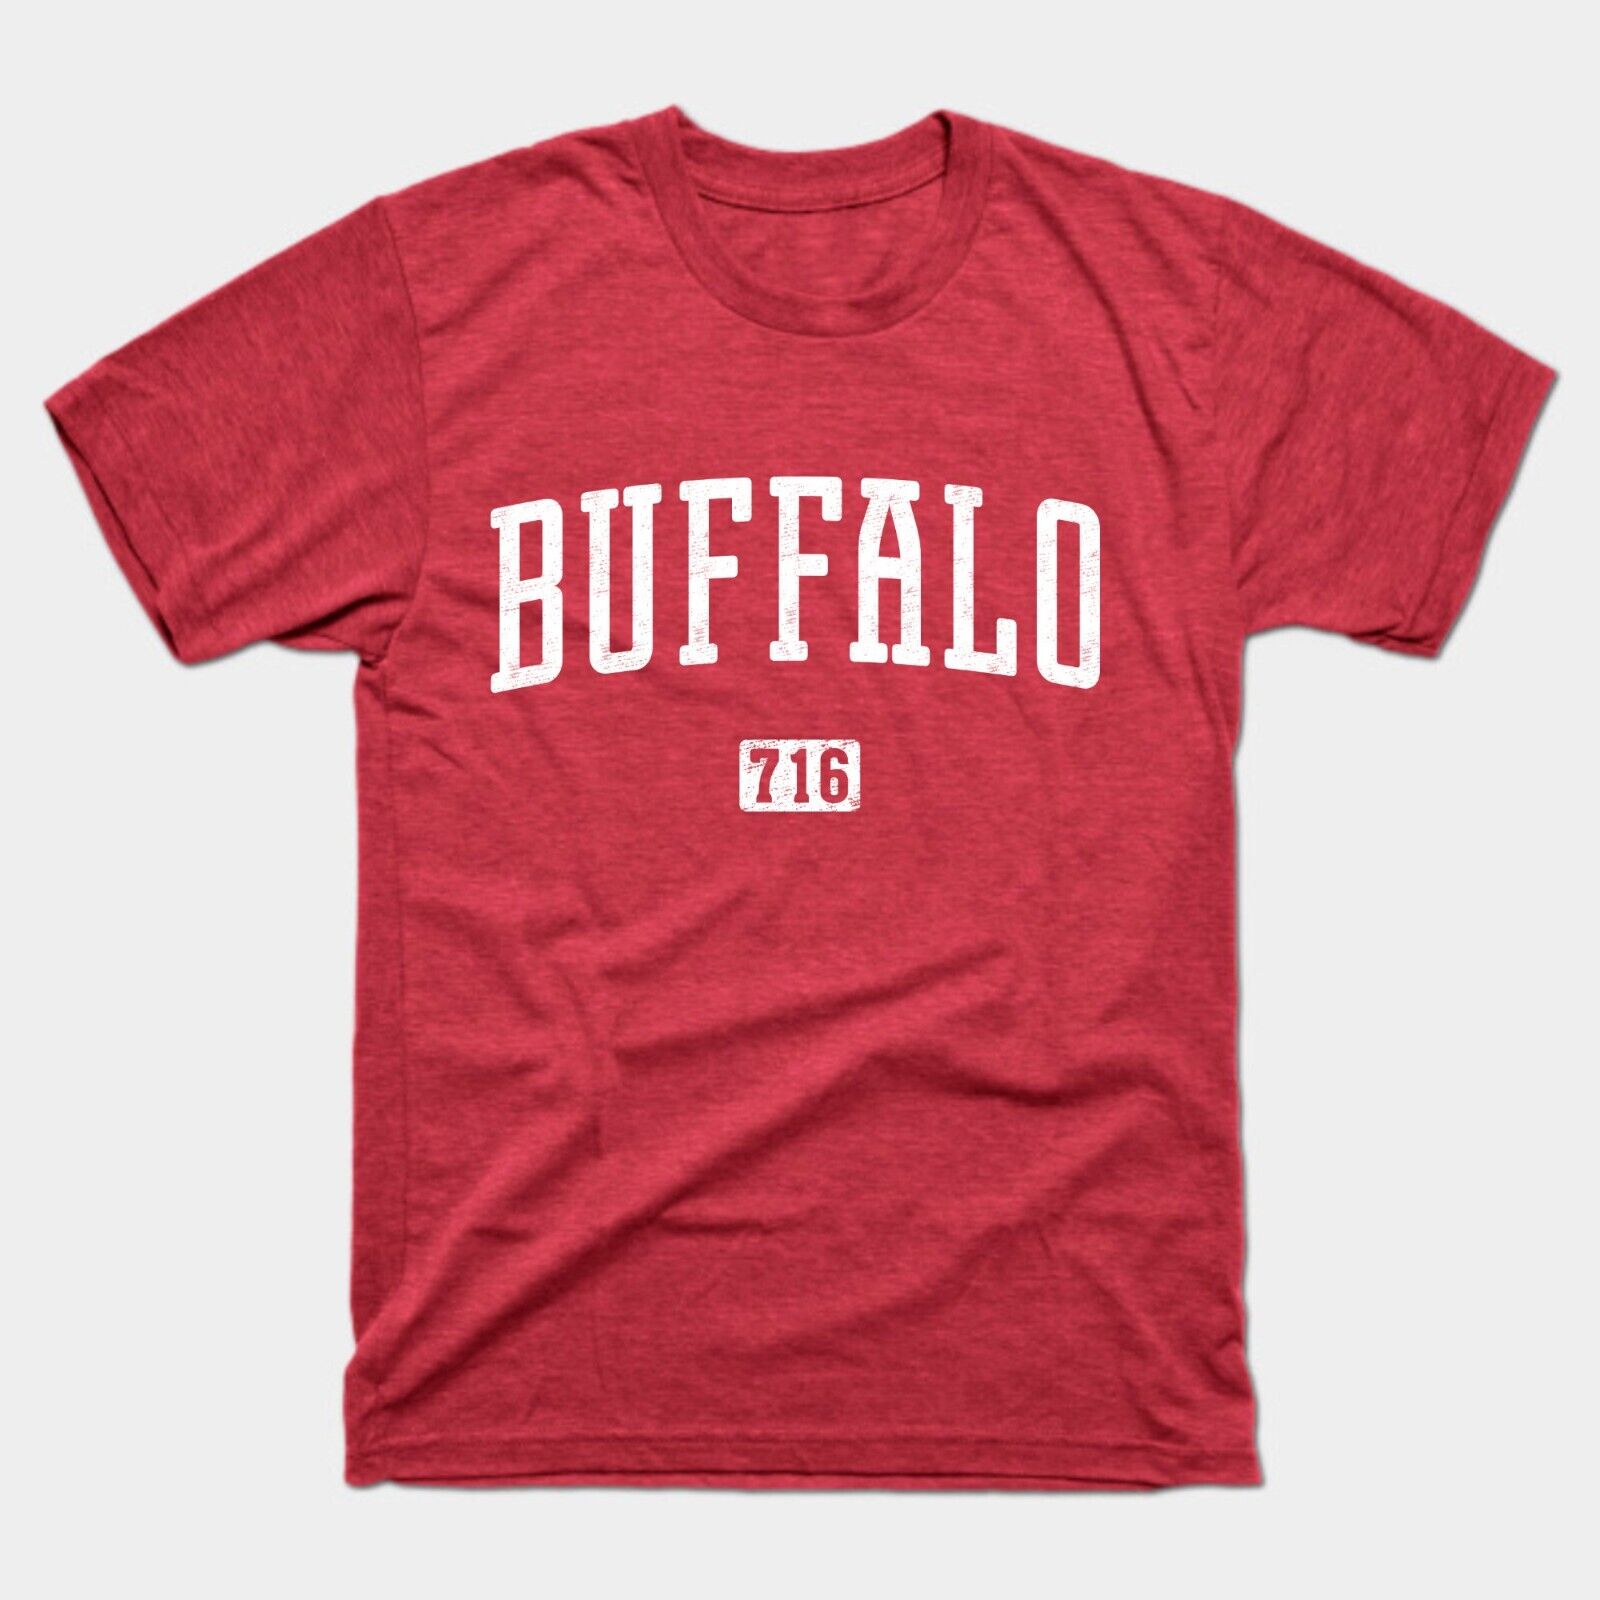 Shirt Vintage Classic T Shirt Buffalo Vintage Tee Unisex Red